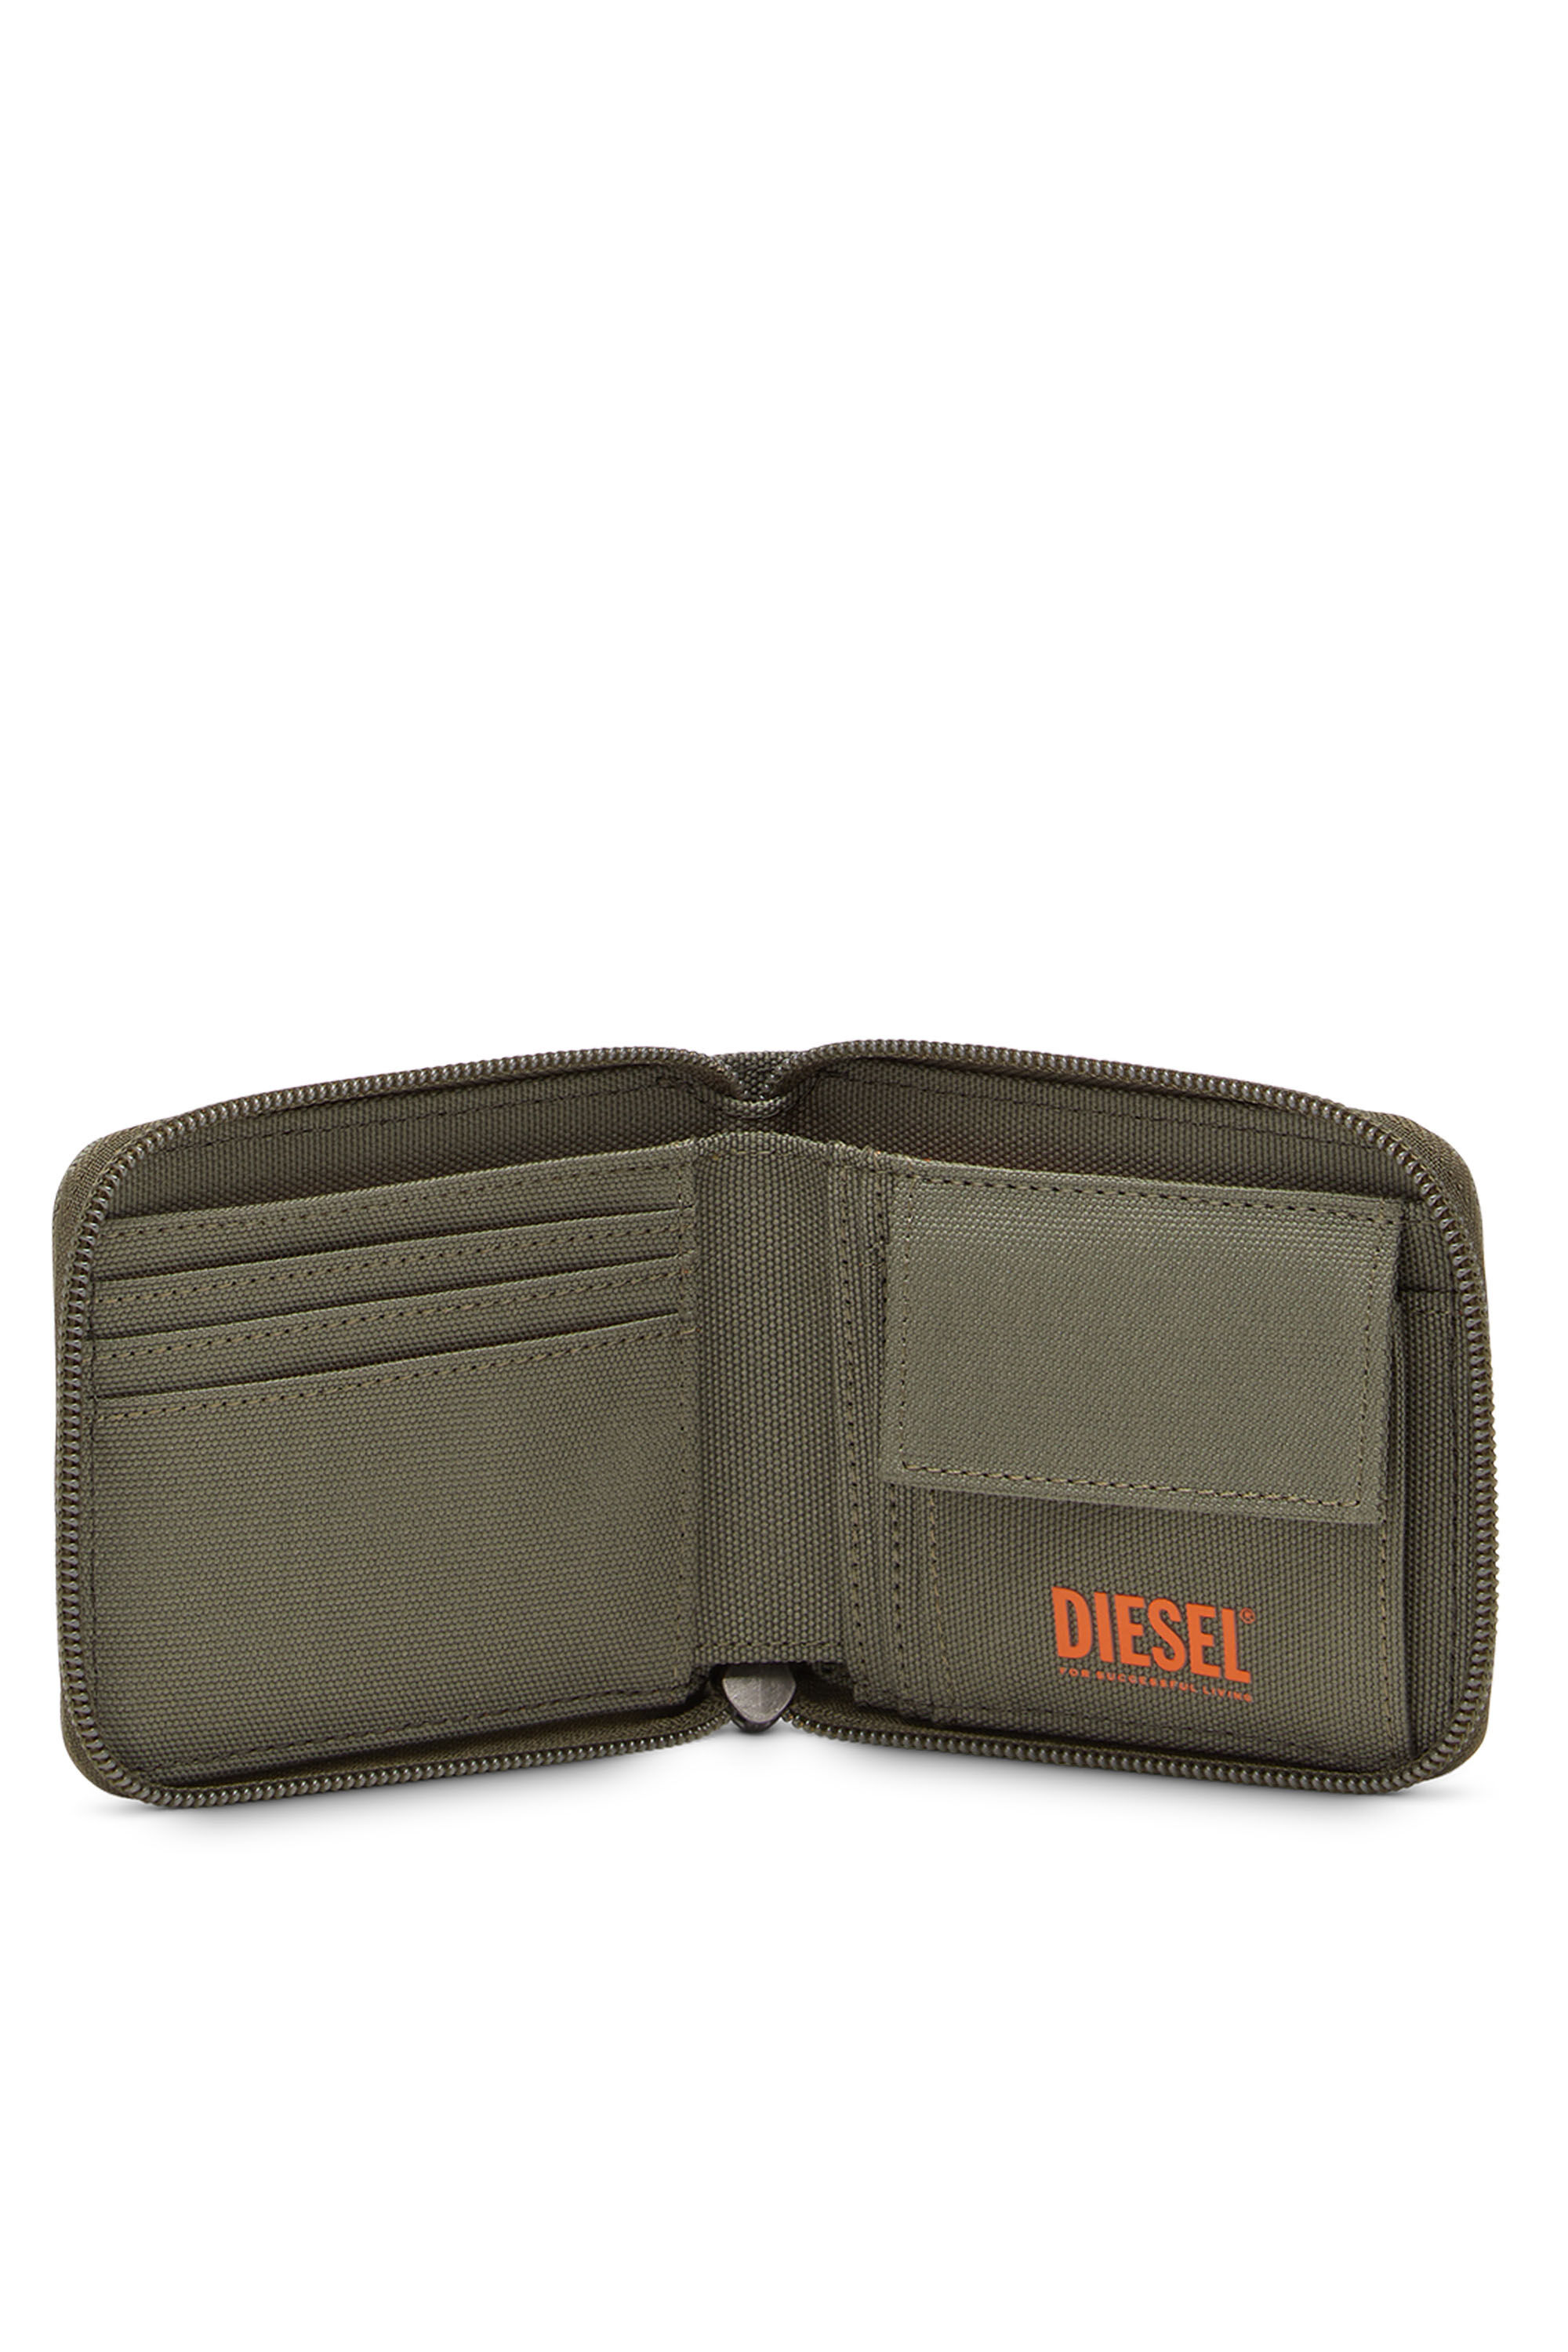 Diesel - HIRESH XS ZIPPI, Military Green - Image 3